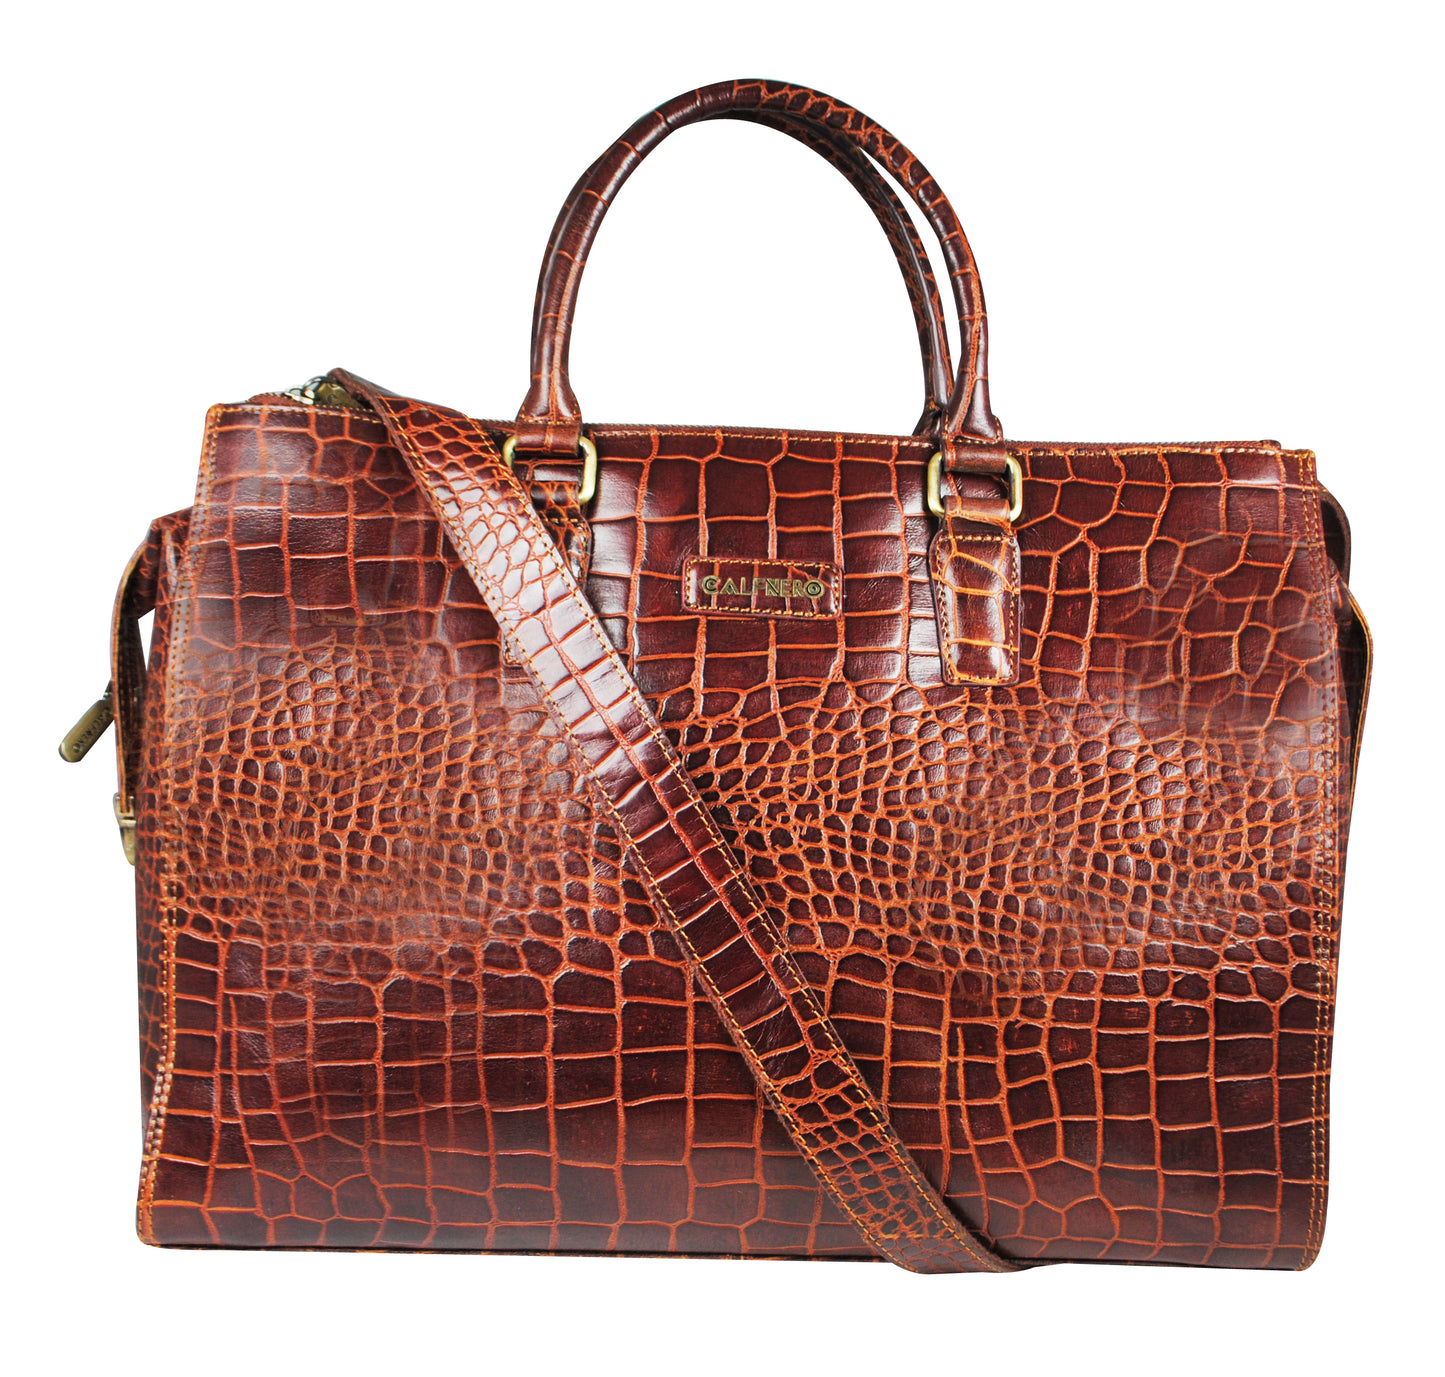 Calfnero Genuine Leather Travel Duffel Bag (1088-cognac)